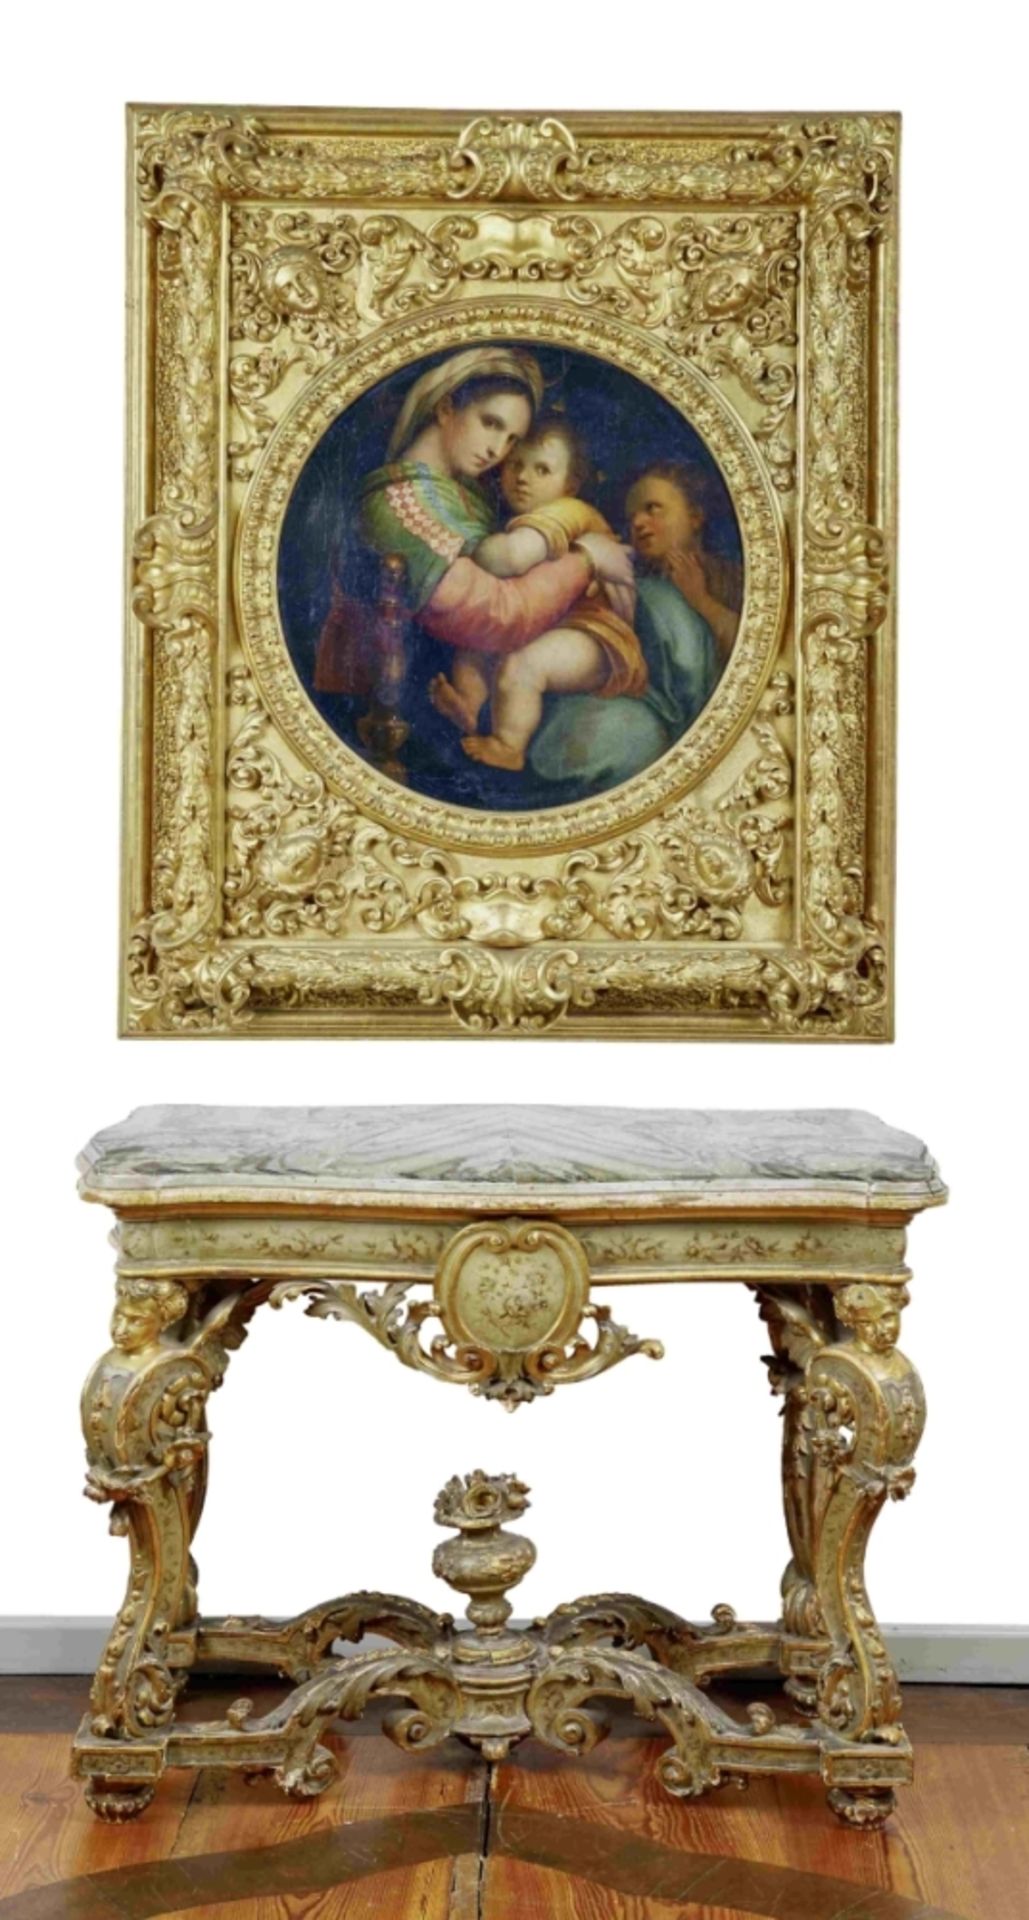 "Madonna della sedia" im Prunkrahmen, 18./19. Jh. - Image 2 of 2